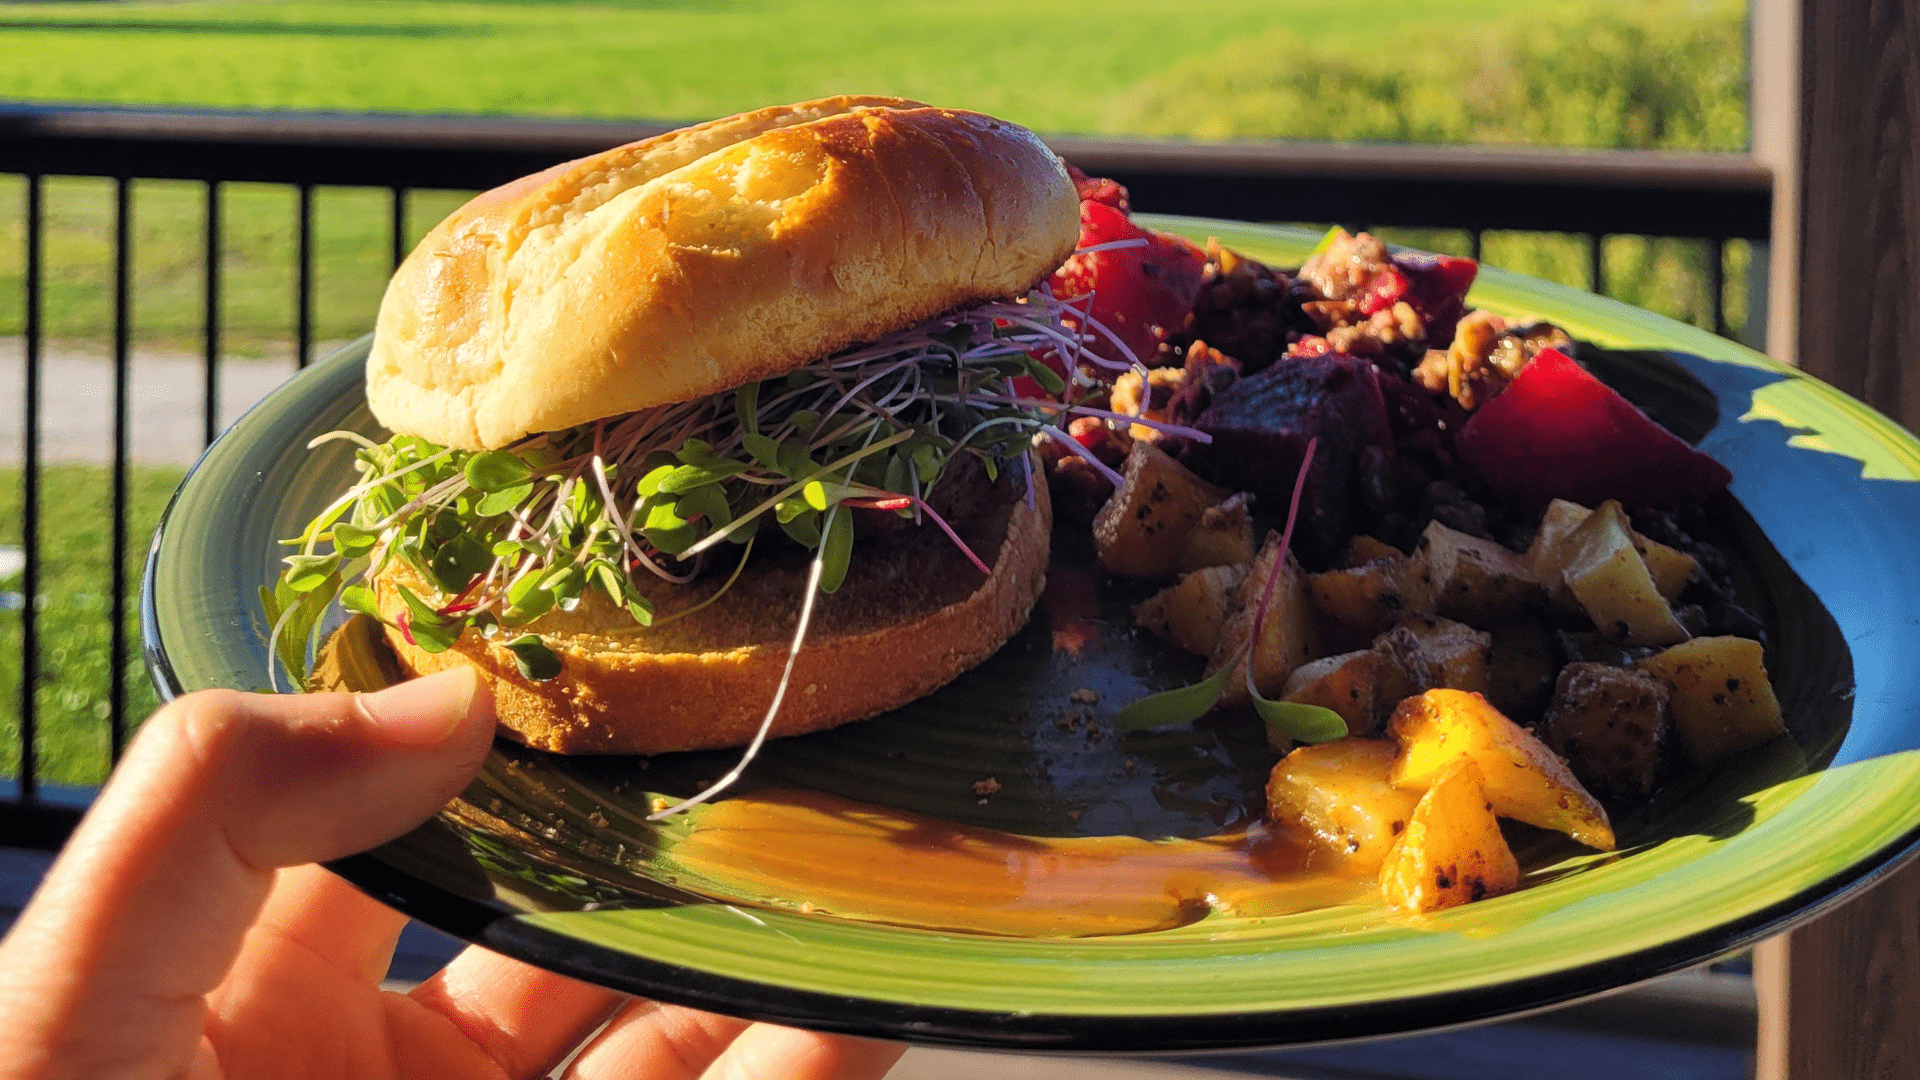 Bison burger with microgreens